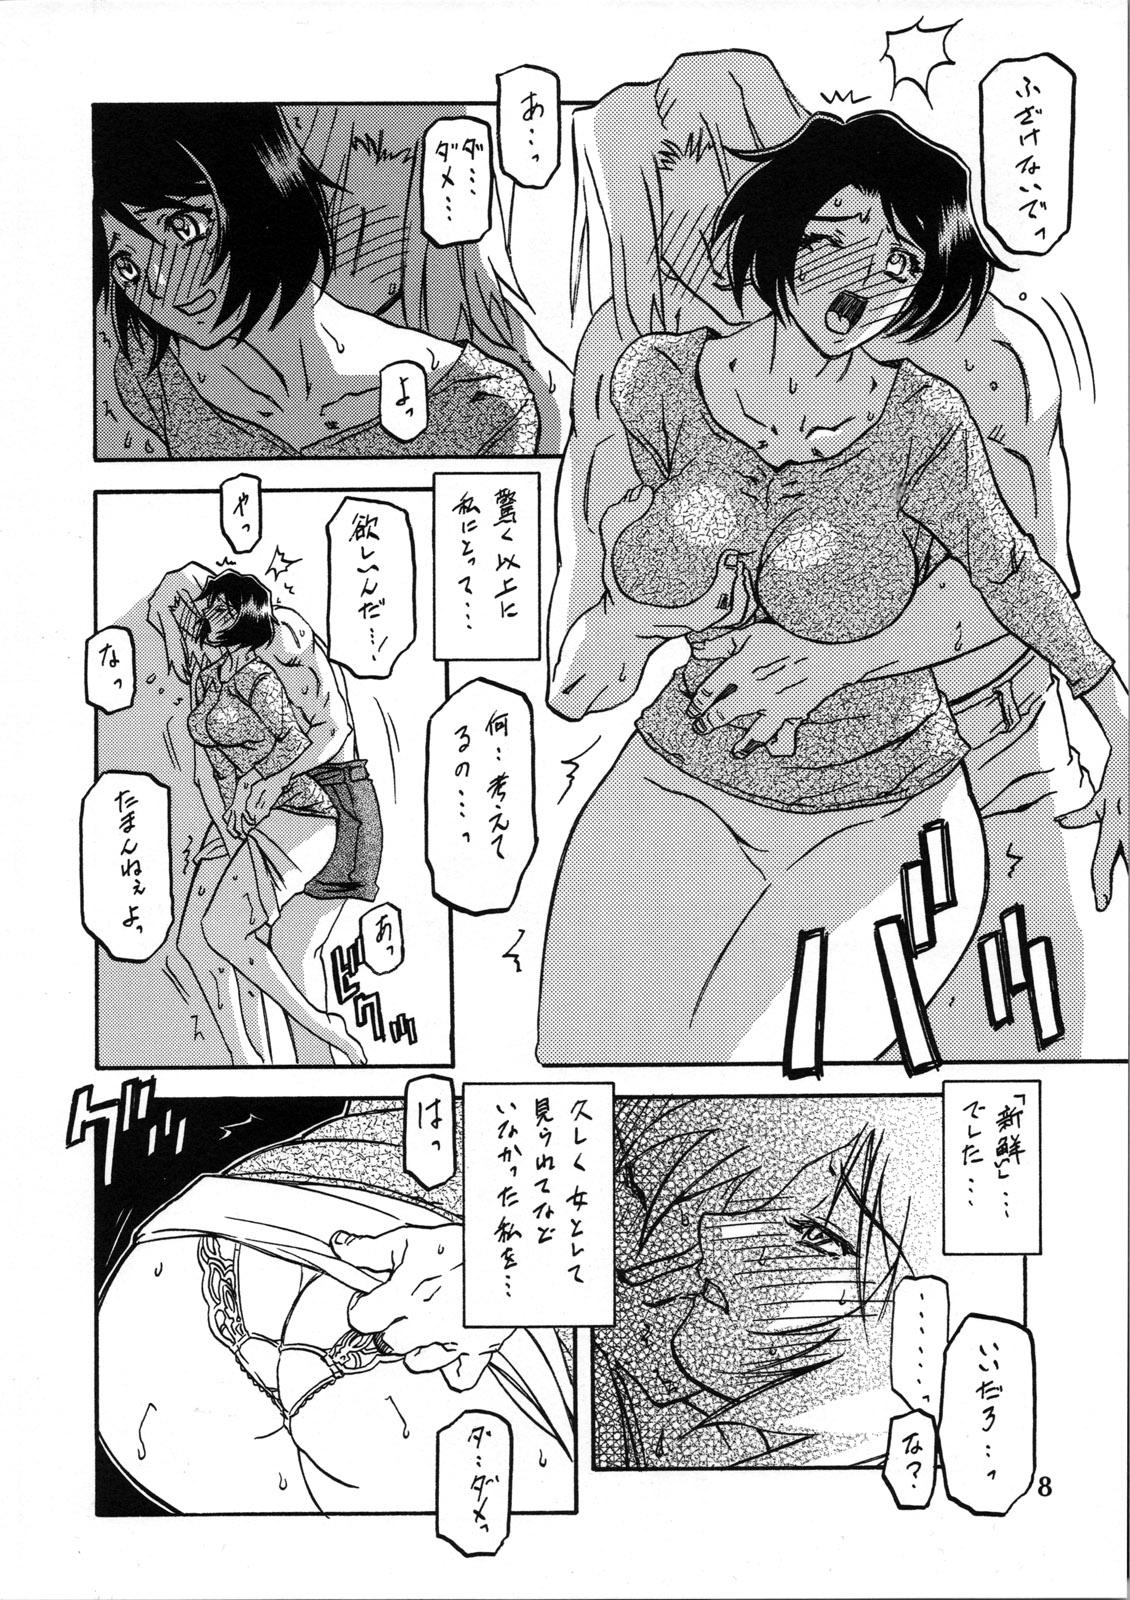 Pervs Akebi no Mi - Satomi Katei - Akebi no mi Lesbian Sex - Page 7